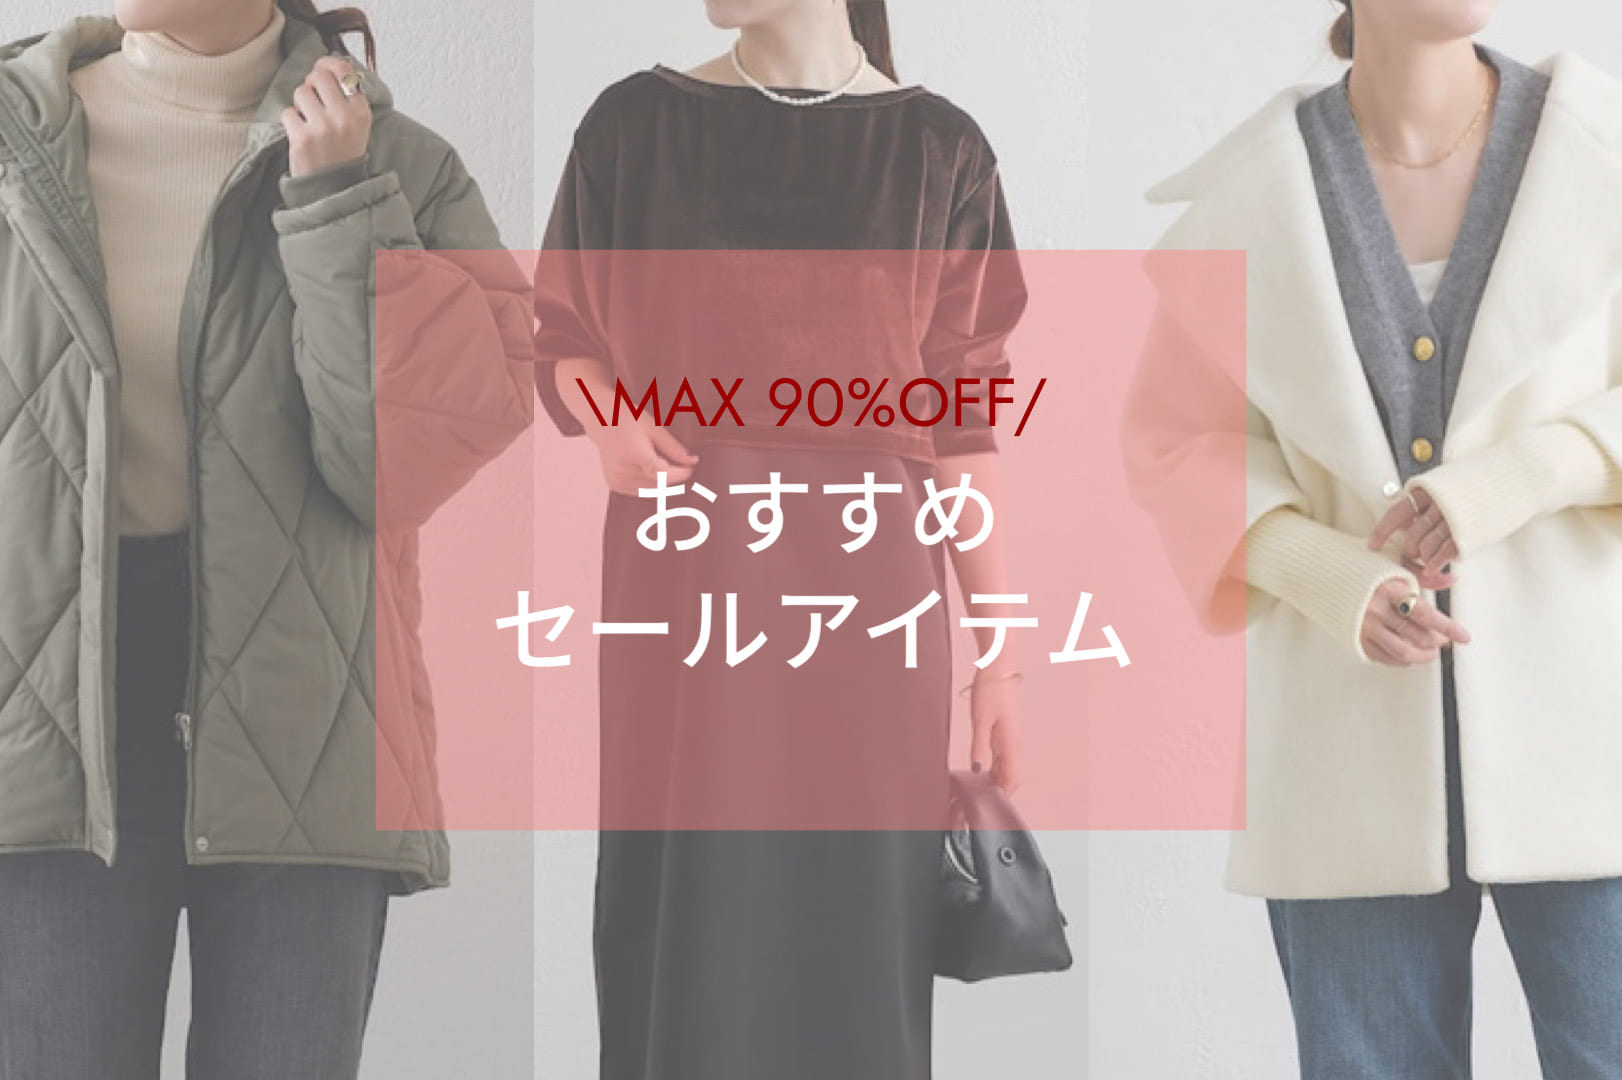 Pal collection 【MAX90%OFF】おすすめセールアイテム